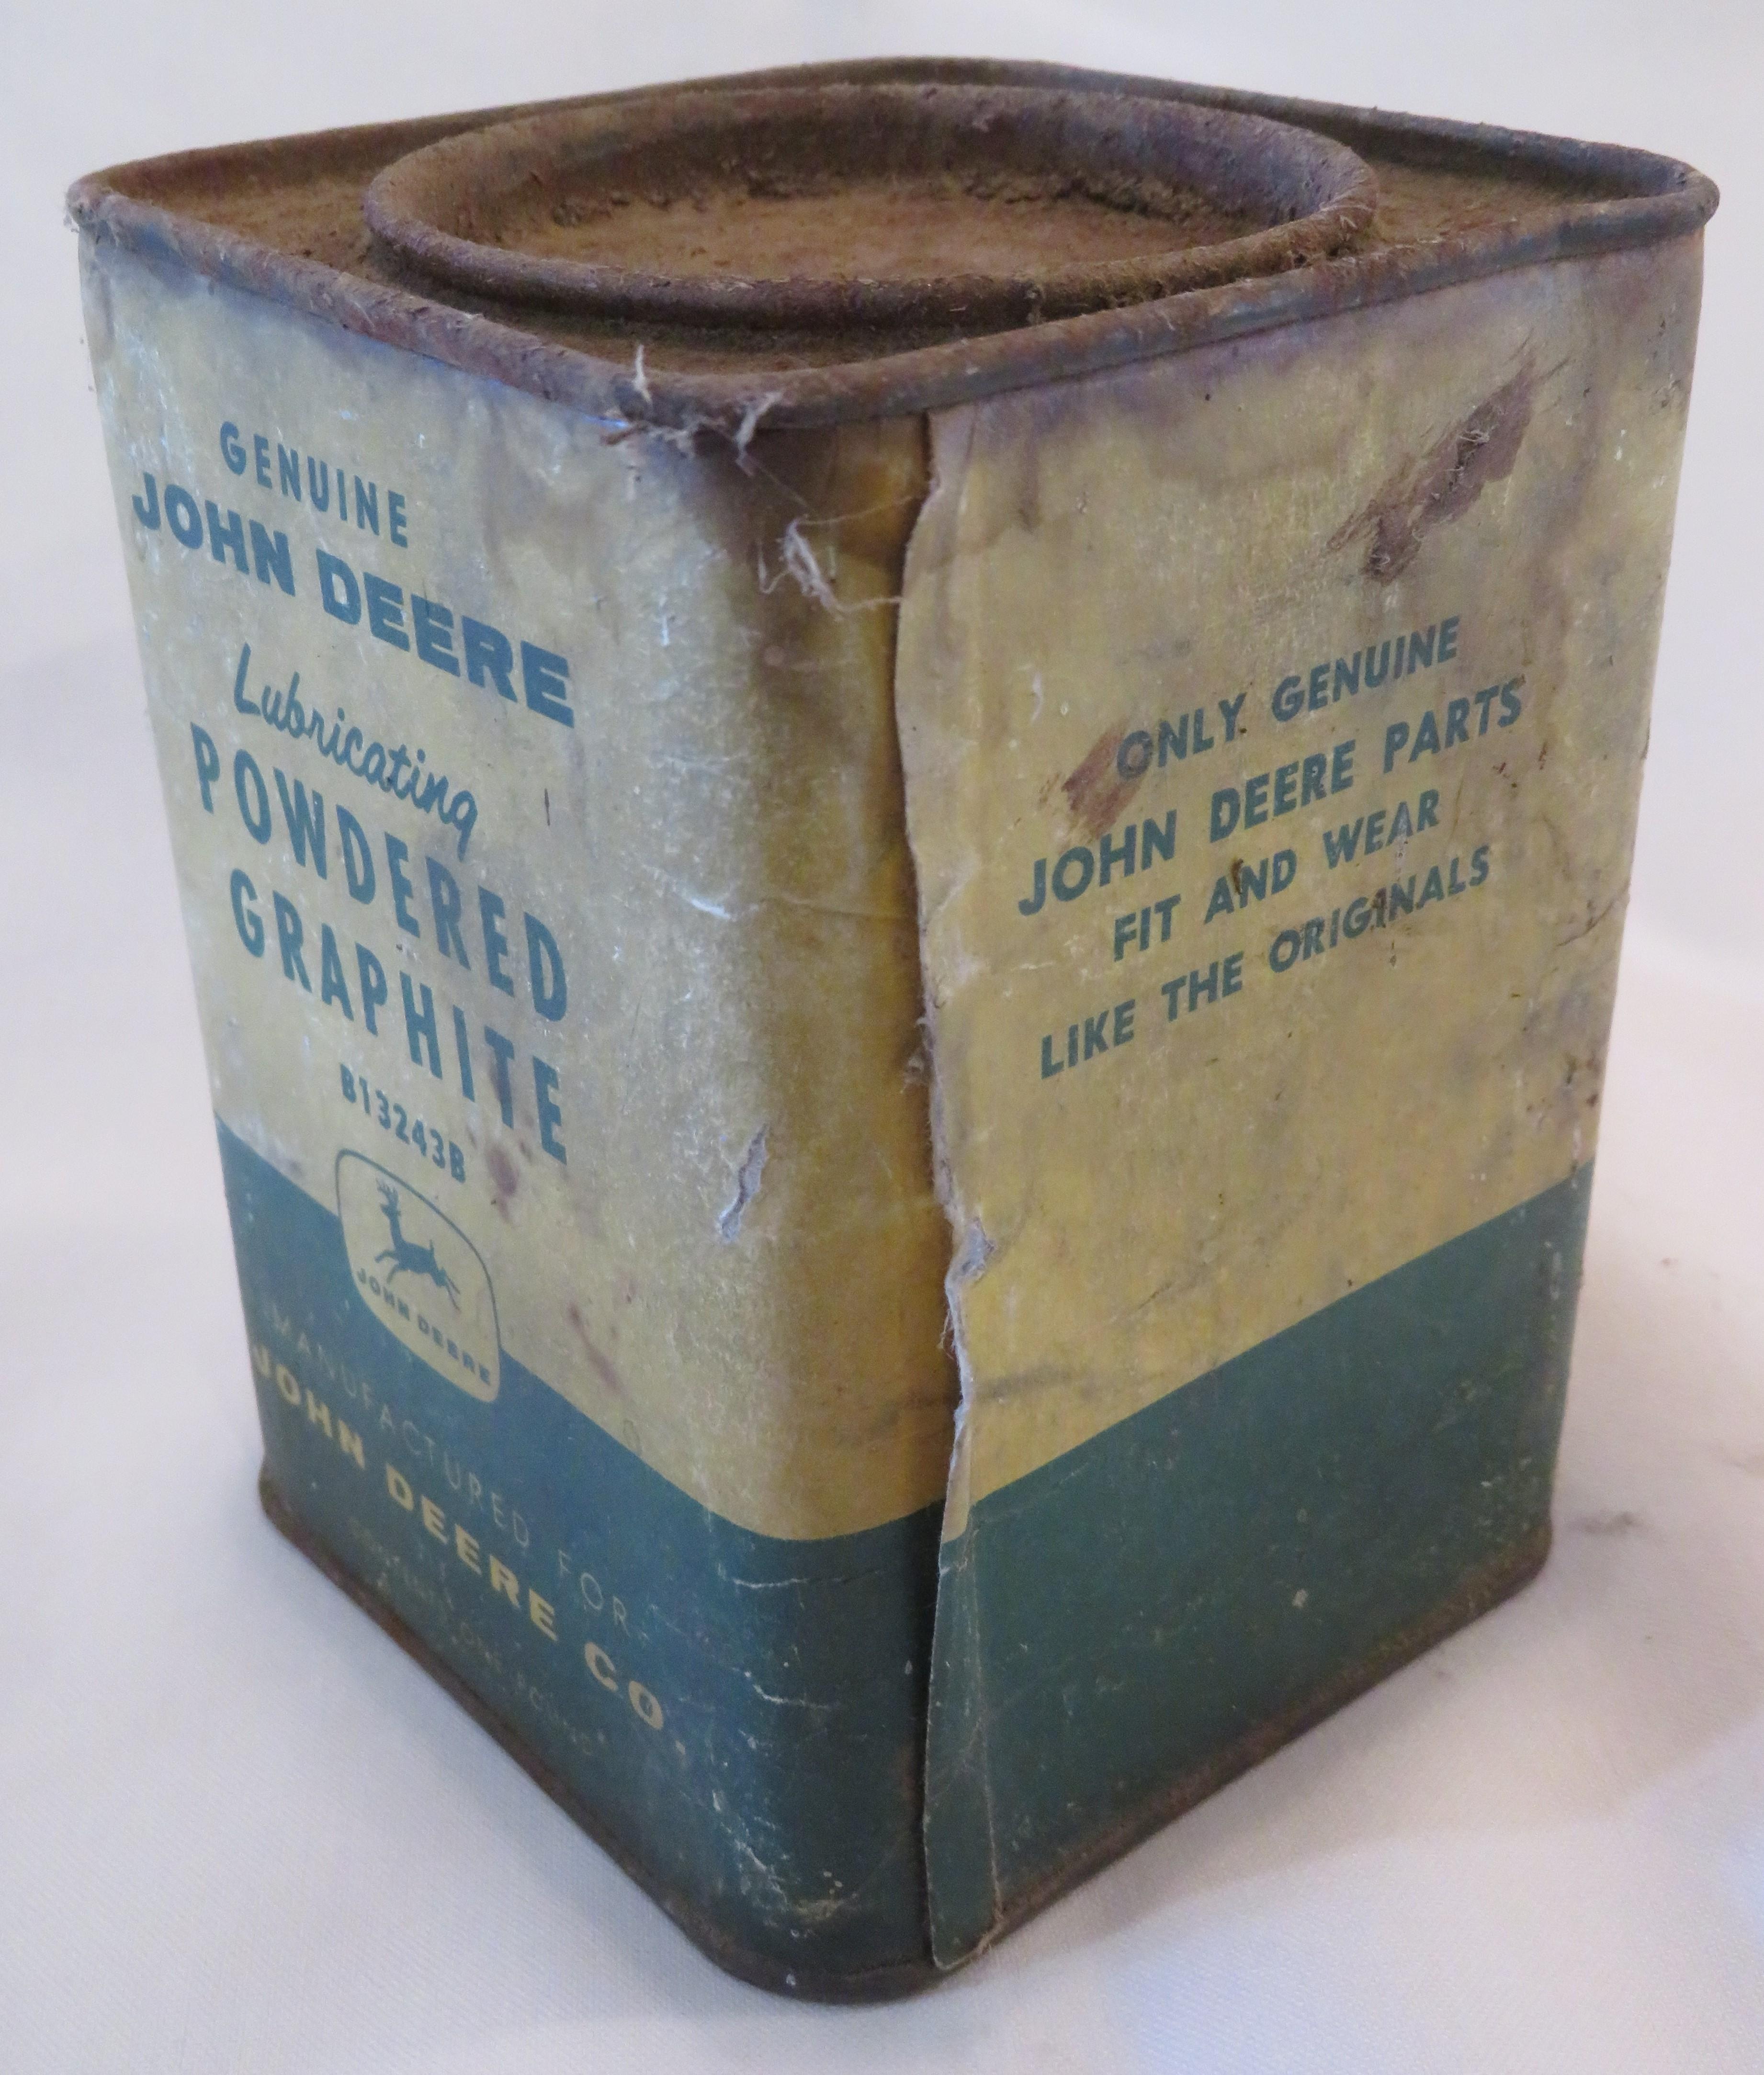 John Deere "Powdered Graphite" Container -- 4 Legged Deere